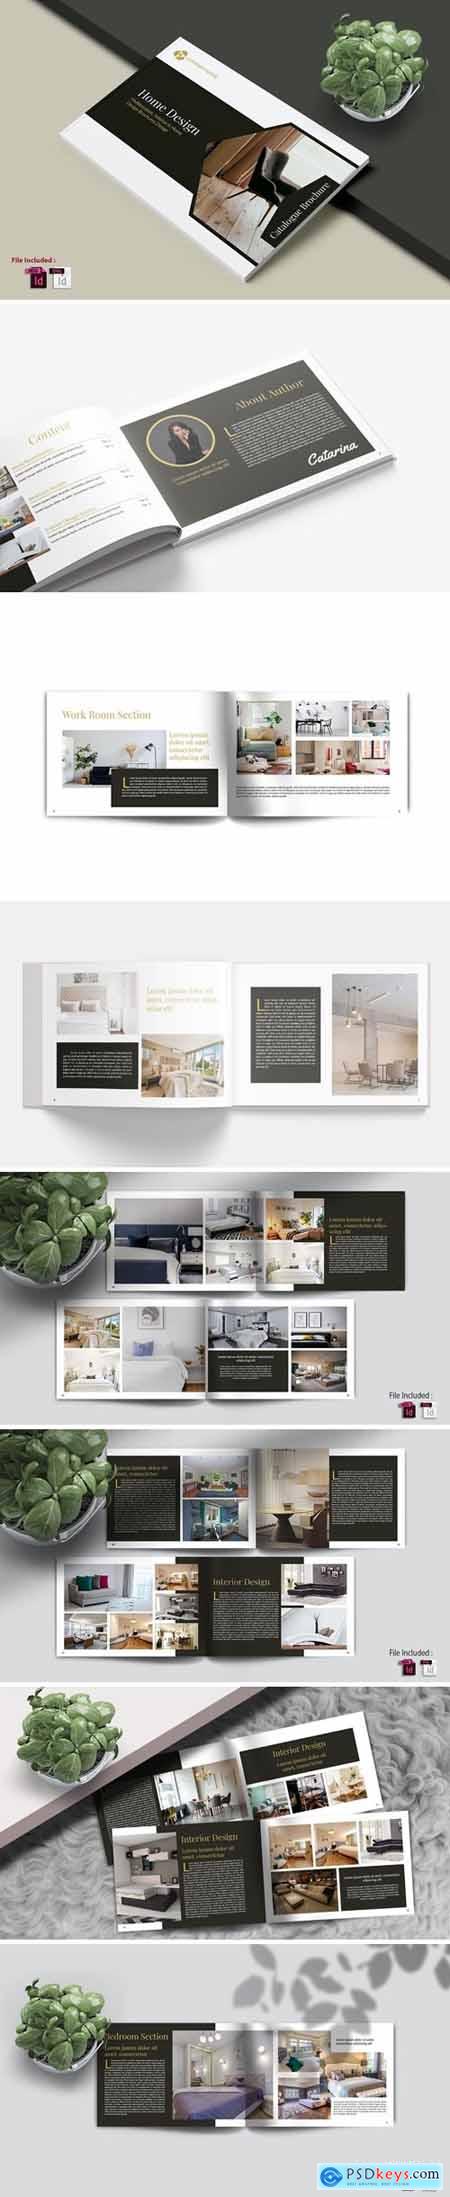 HOME DESIGN - A4 Interior Print Template